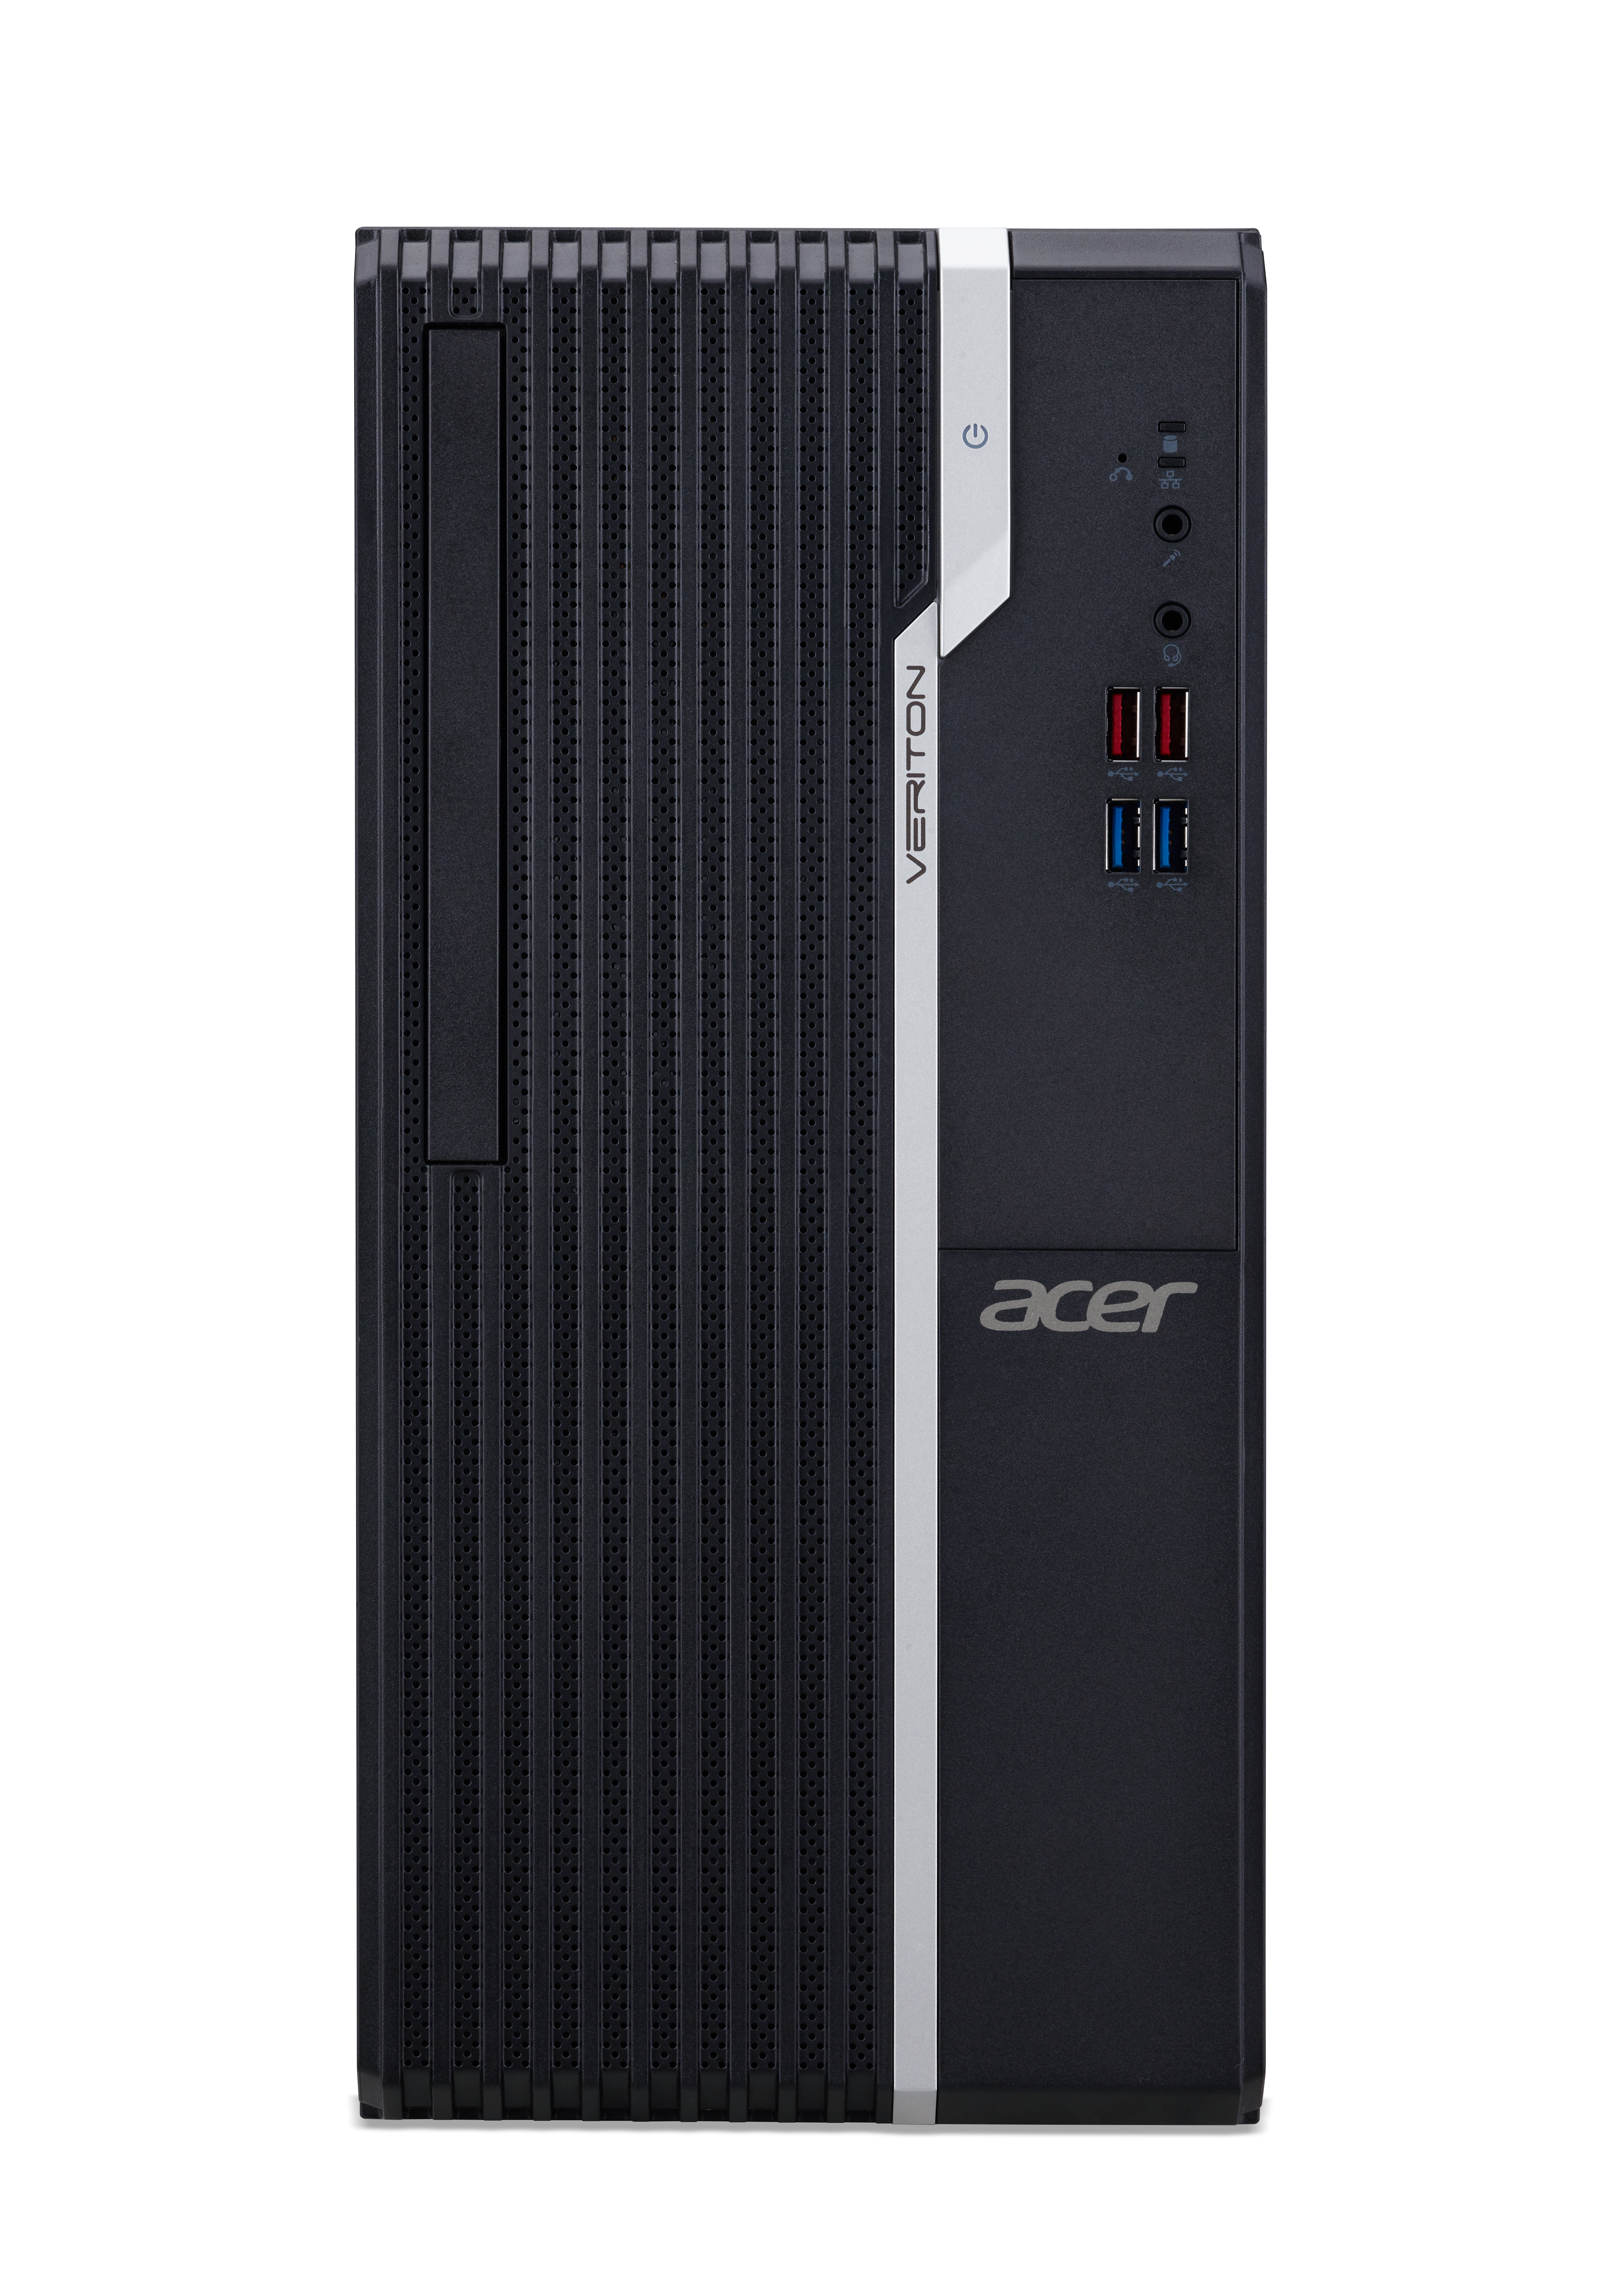 Acer Veriton S2680G DDR4-SDRAM i7-11700 Desktop Intel Core? i7 8 GB 512 GB SSD Windows 10 Pro PC Nero